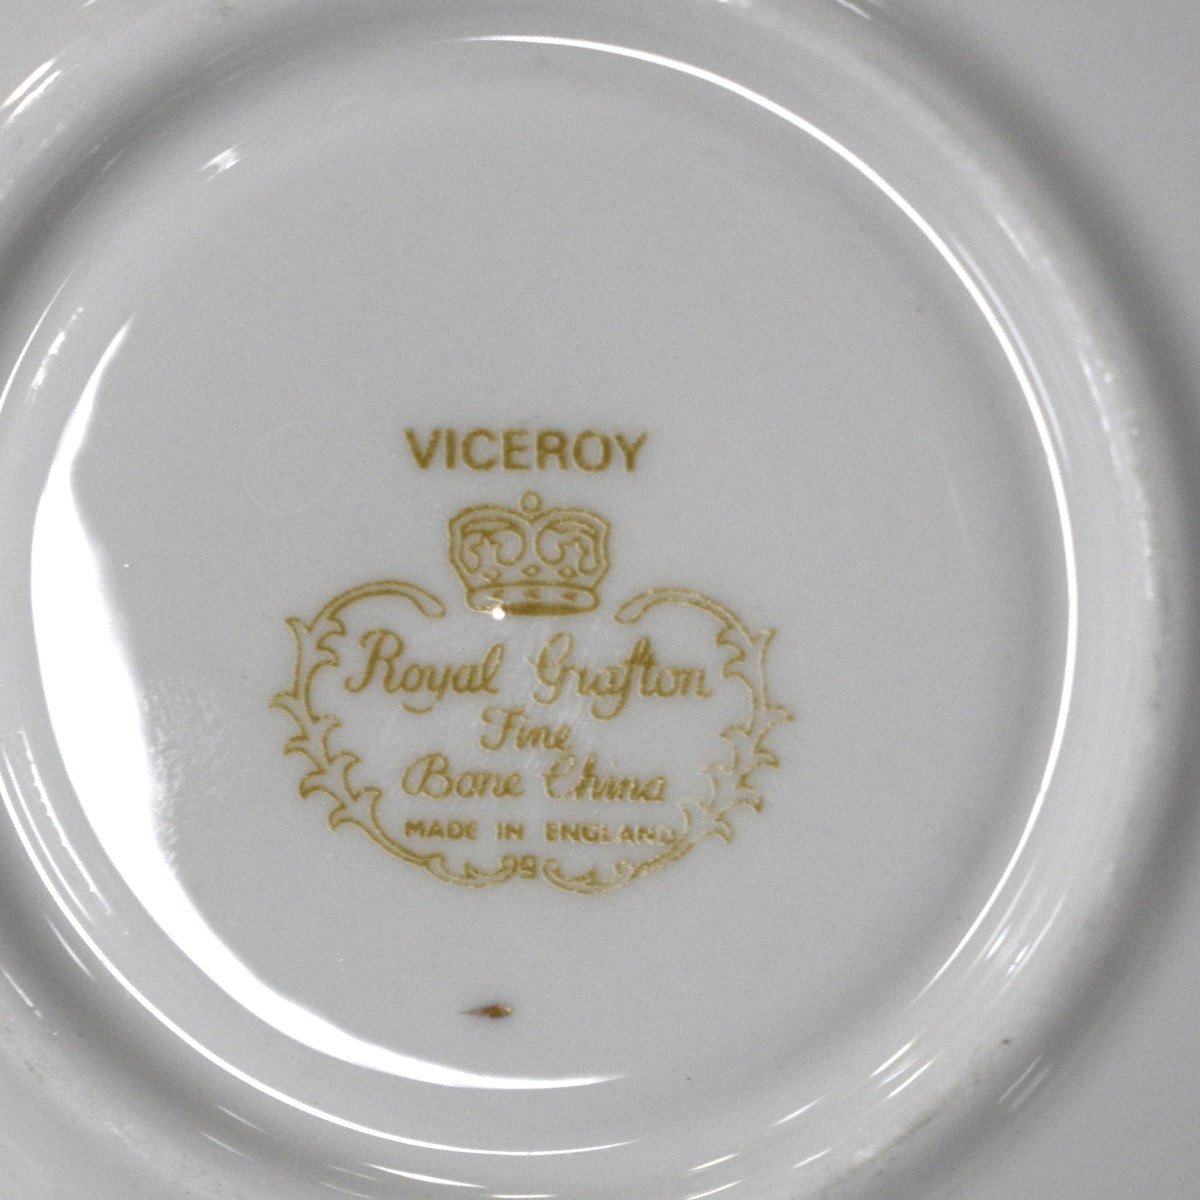 Royal Grafton "Viceroy" Dinner Service